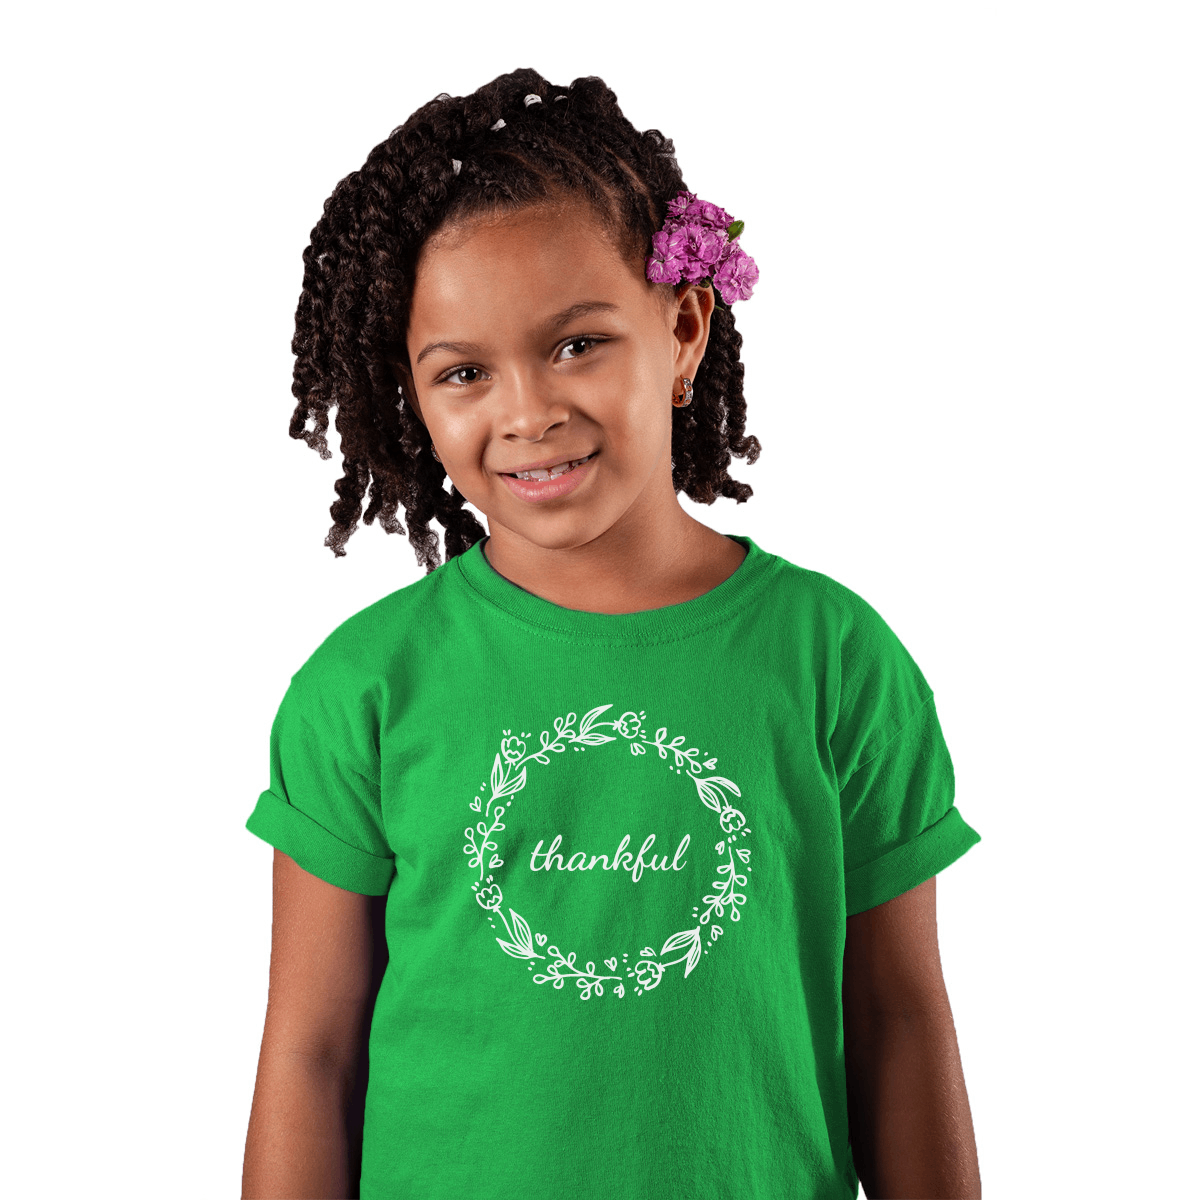 Thankful Kids T-shirt | Green